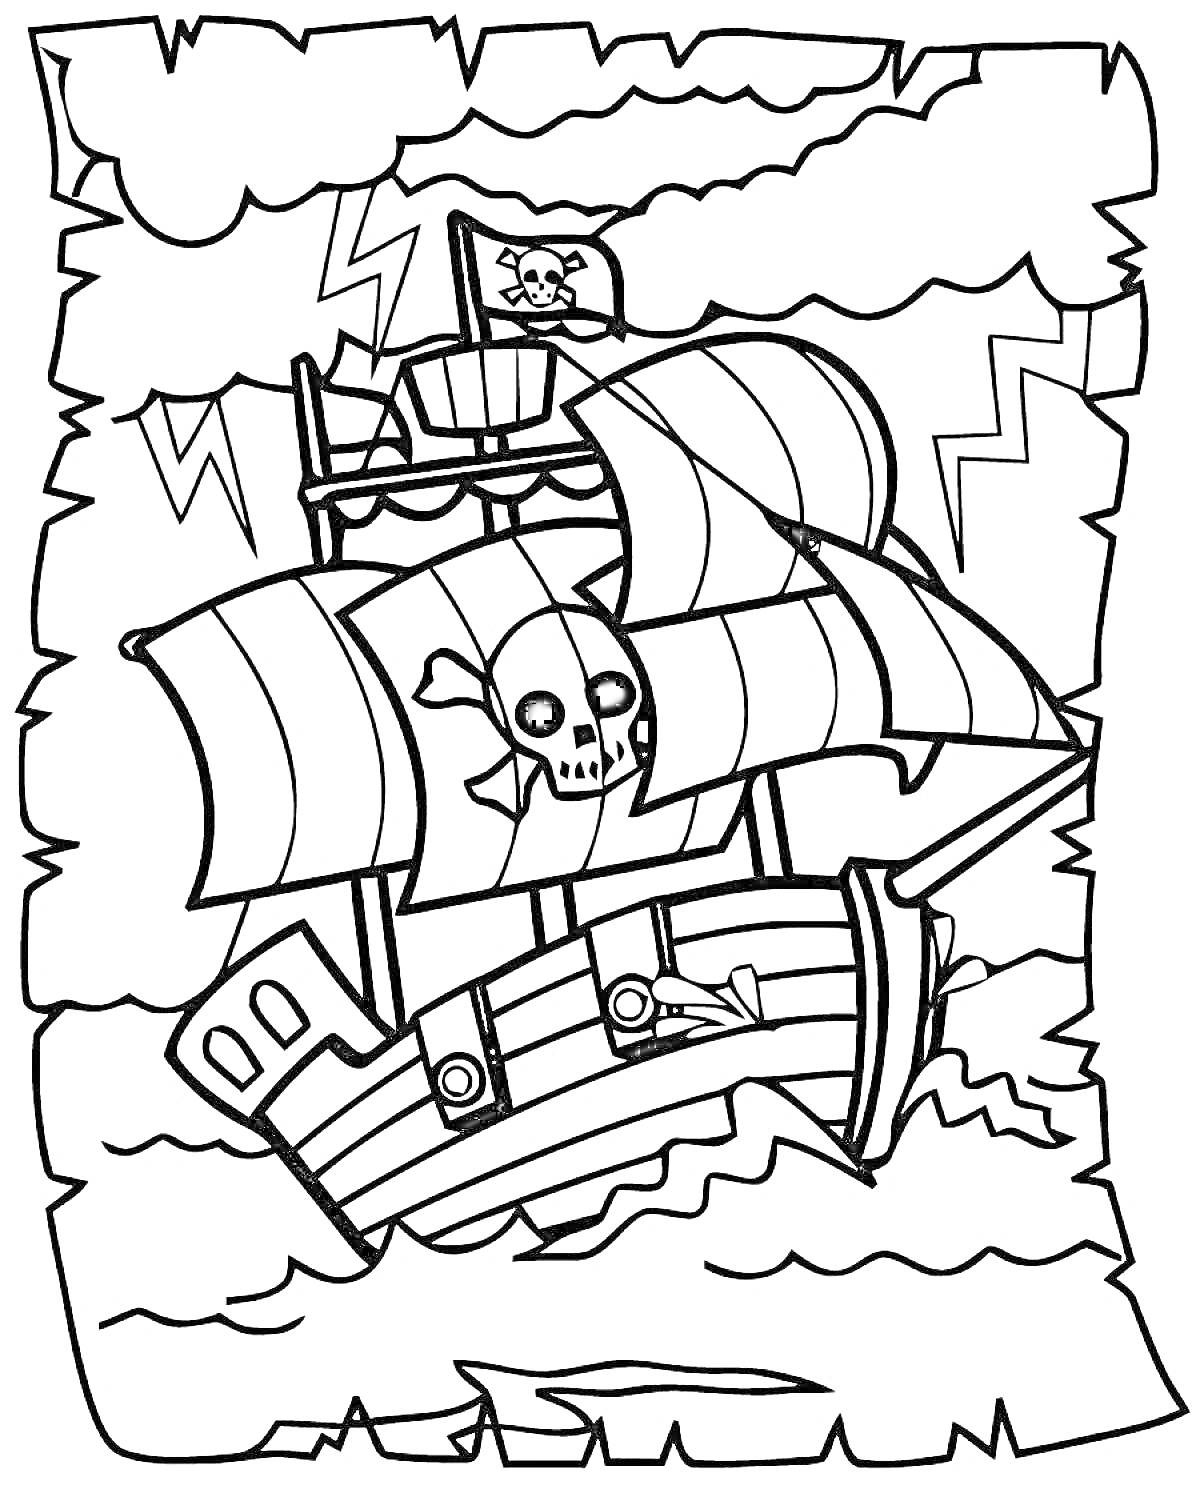 Раскраска Пиратский корабль с черепом на парусе, флагом с черепом, волнами и молниями на фоне